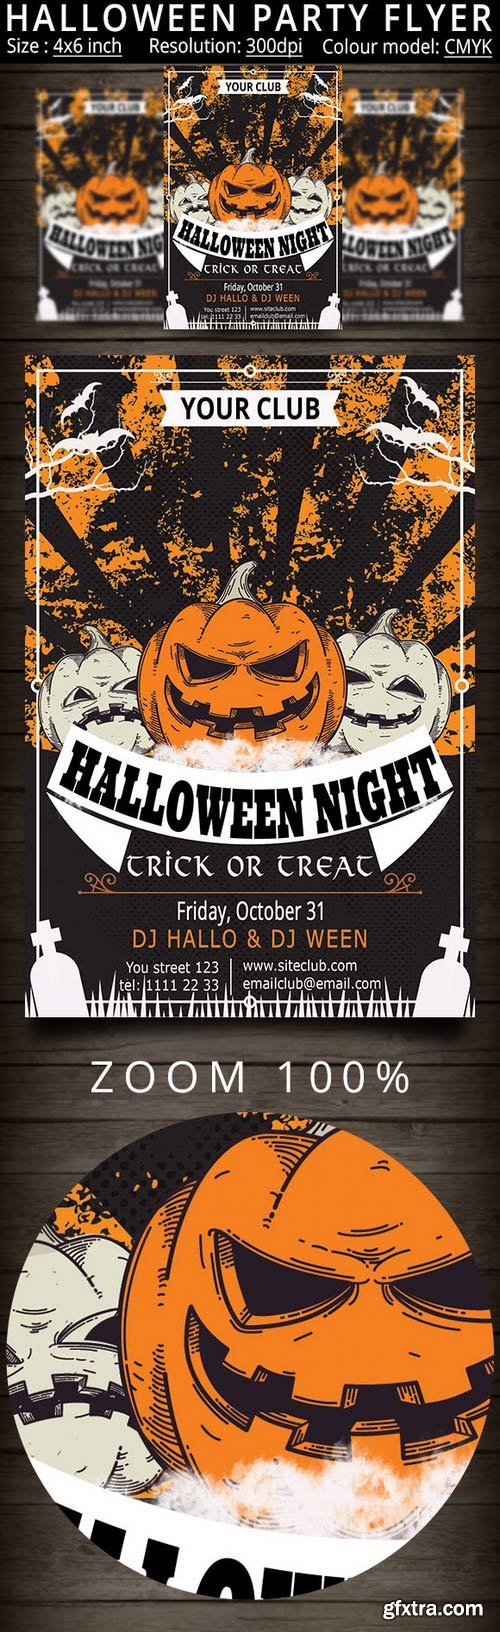 CM - Halloween Party Flyer 410417